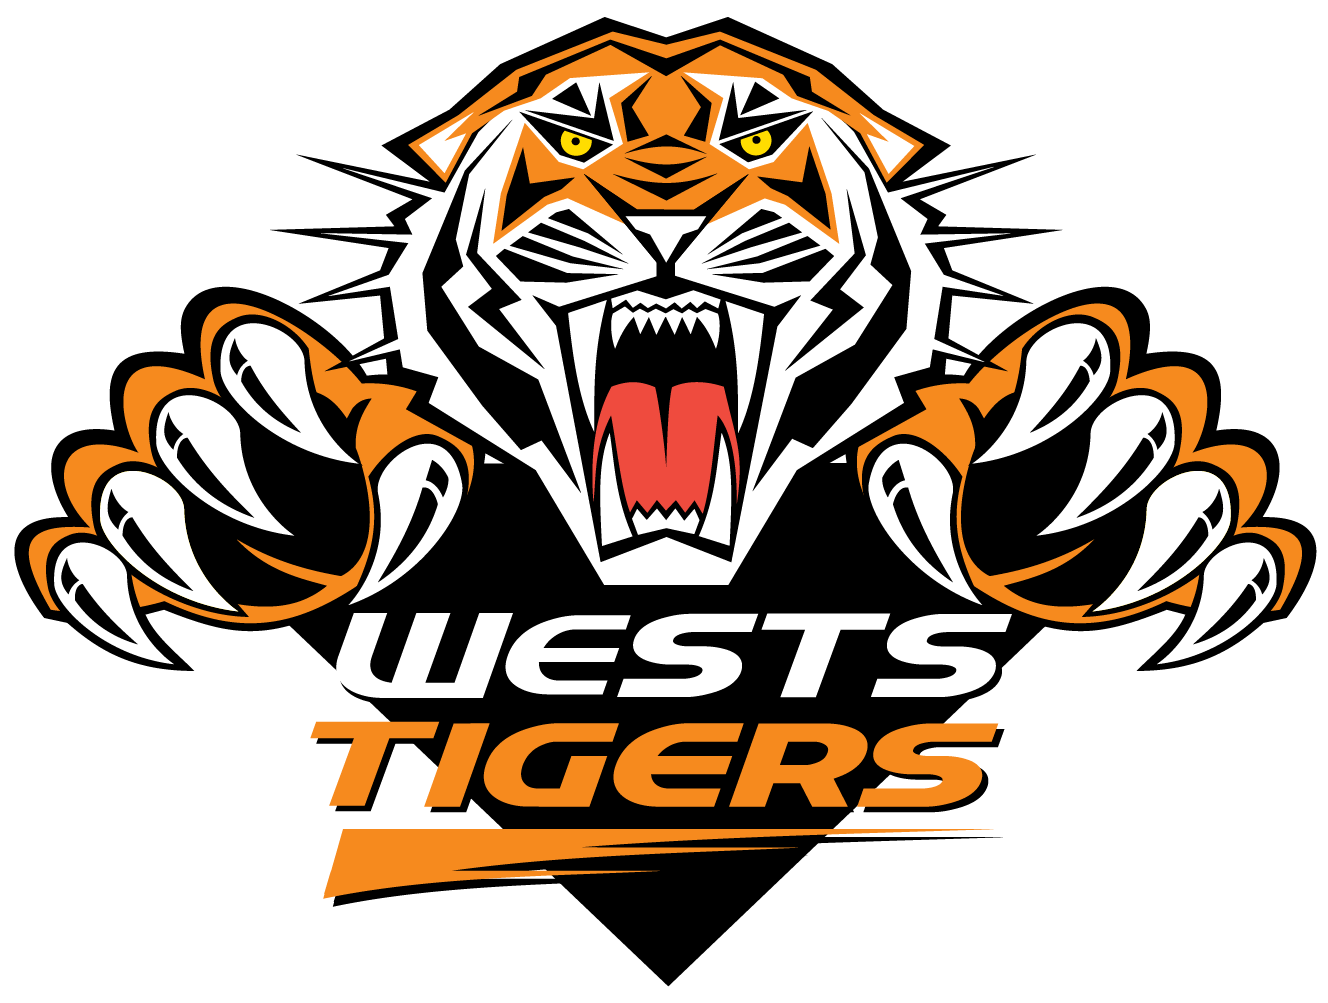 Wests Tigers Logo